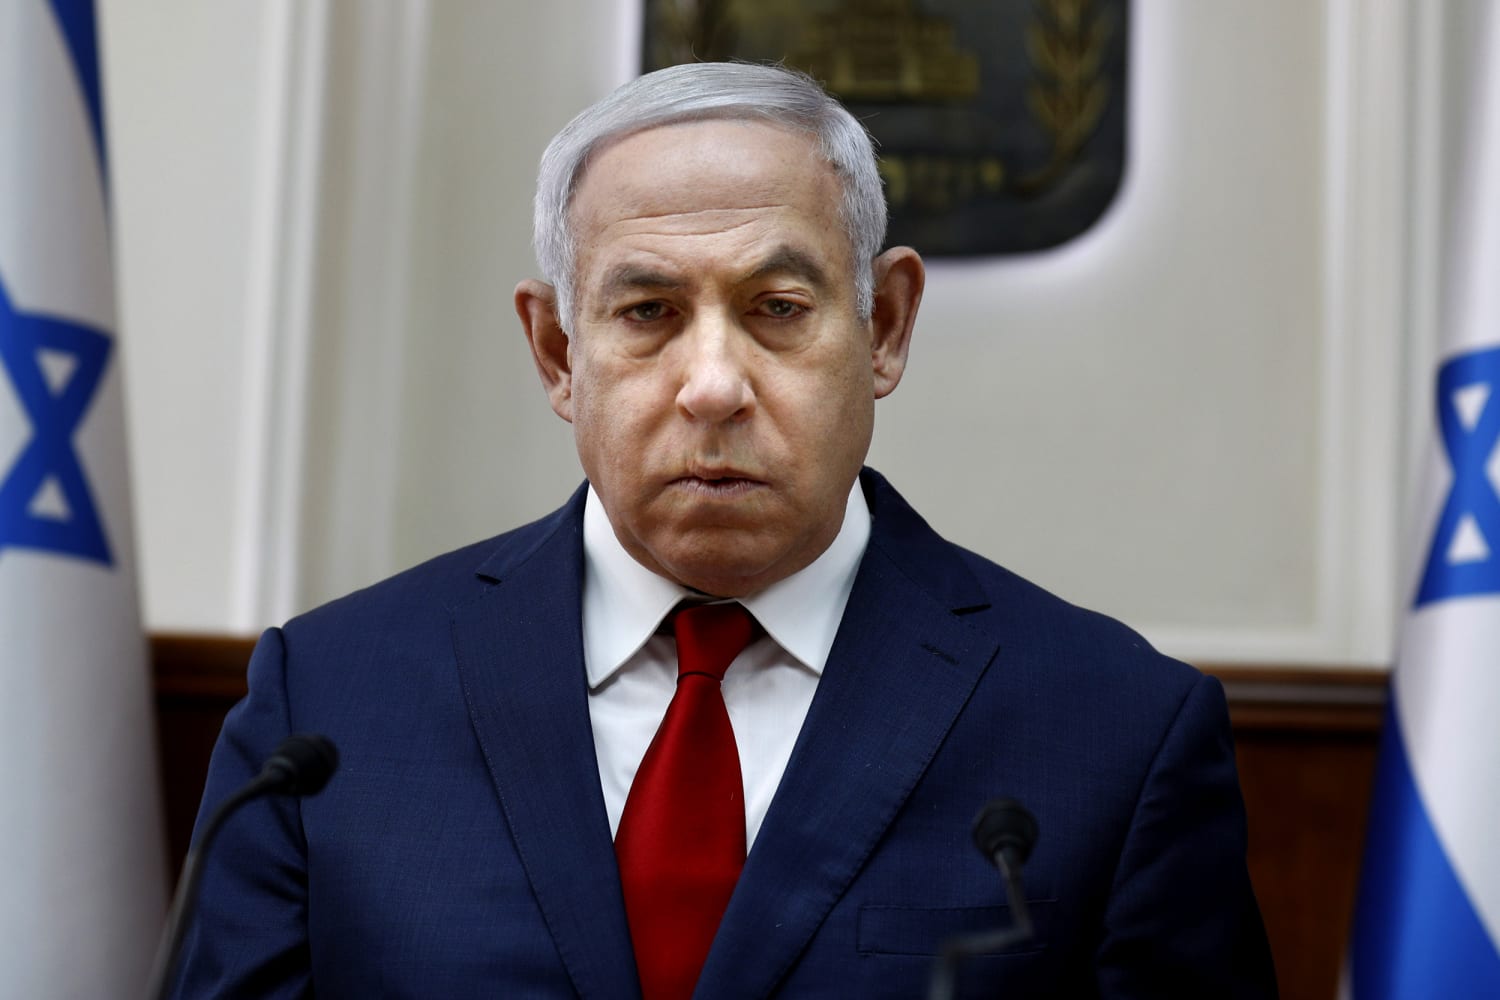 Benjamin Netanyahu's personality, not his policies, is what Israelis were  voting on